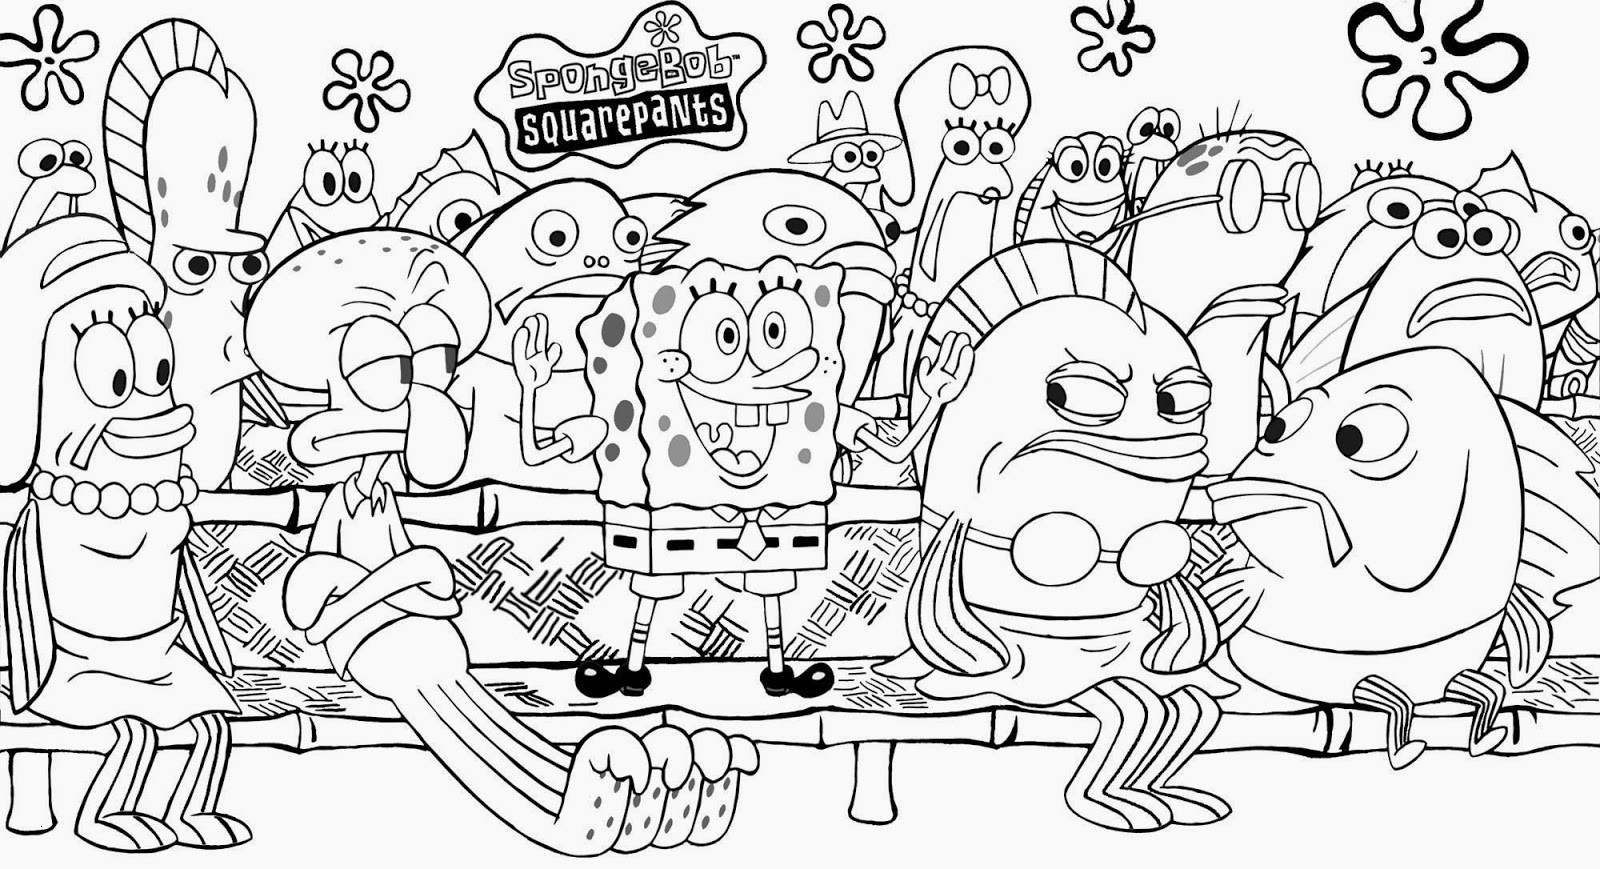 Spongebob Squarepants Coloring Pages Games Wallpaper